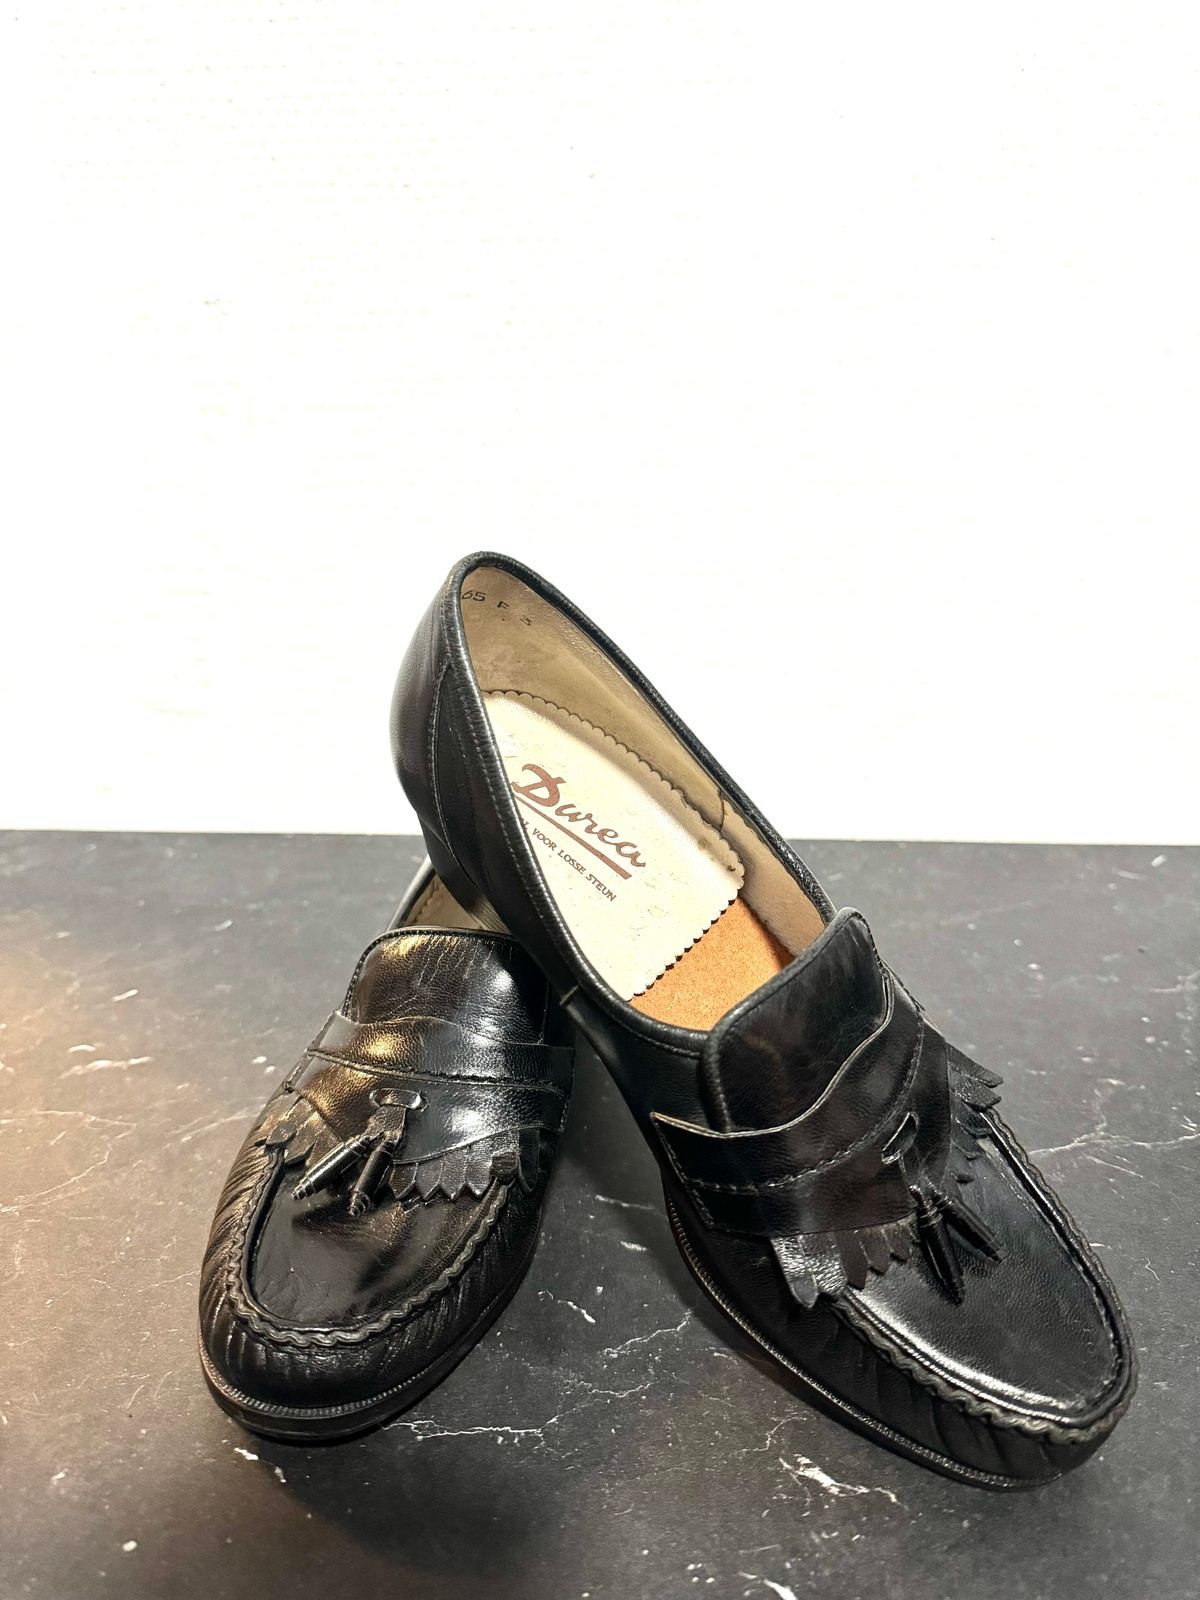 80's New Durea Loafer shoes